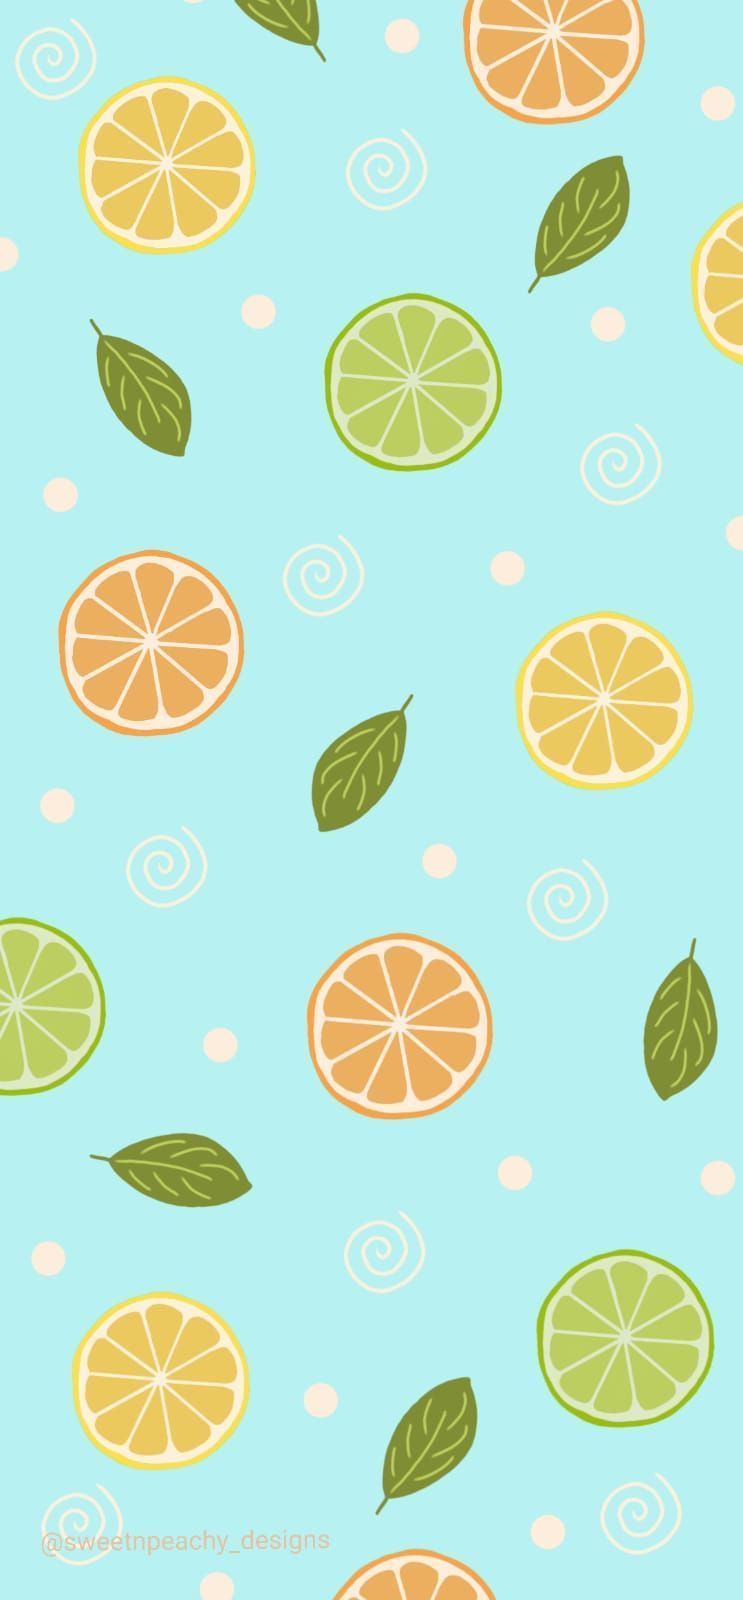 Sweet N Peachy Designs is a gorgeous lemon, lime and orange wallpaper with lemon leaves and swirls!!!! #orange #lemon #lime #leaves #blue #citrus #juice #wallpaper #phonebackground #phonewallpaper #phonewallpaperbackground #adorable #